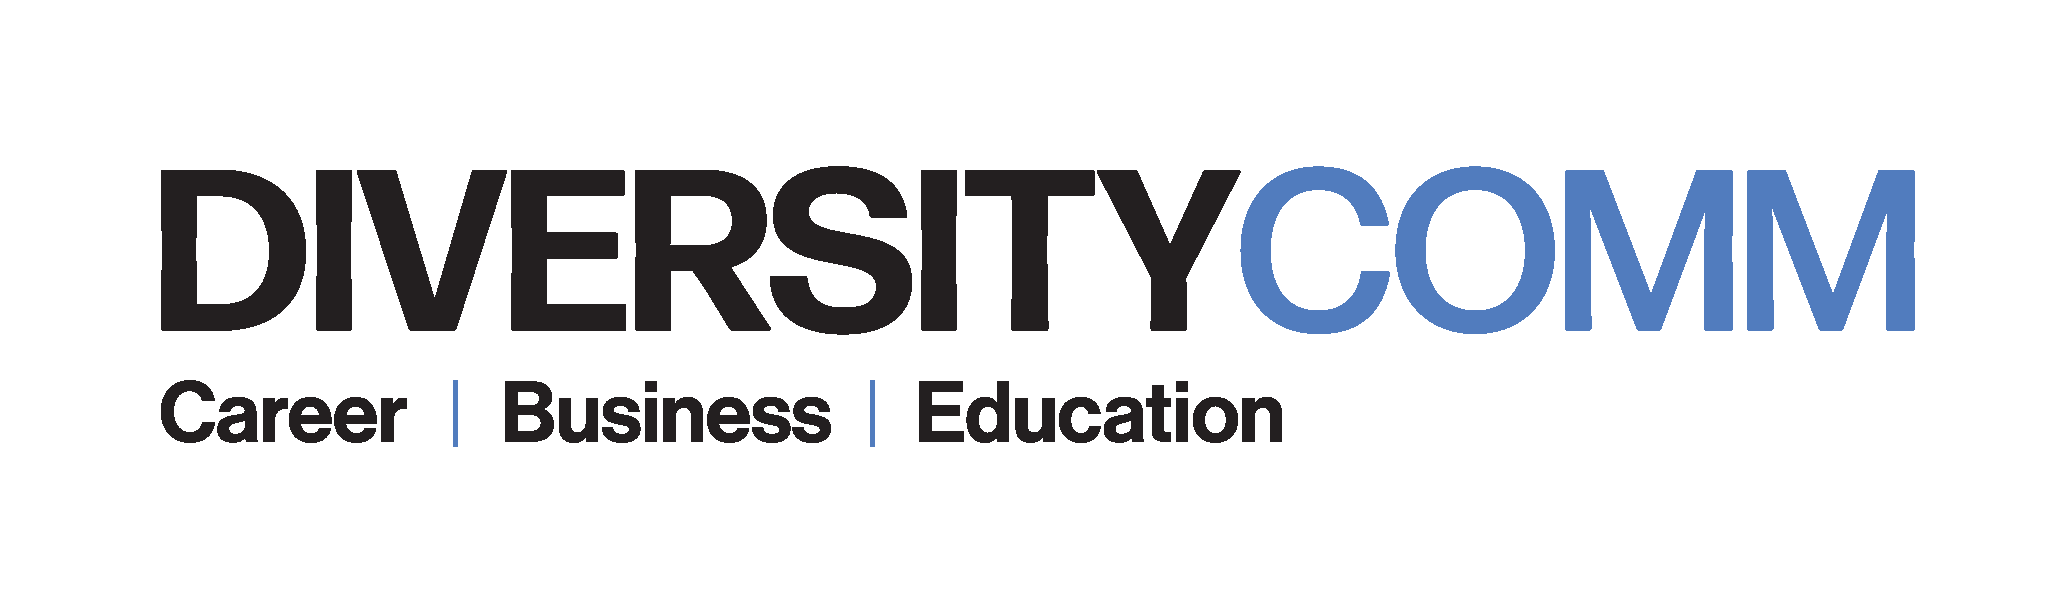 DiversityComm - Career. Business. Education